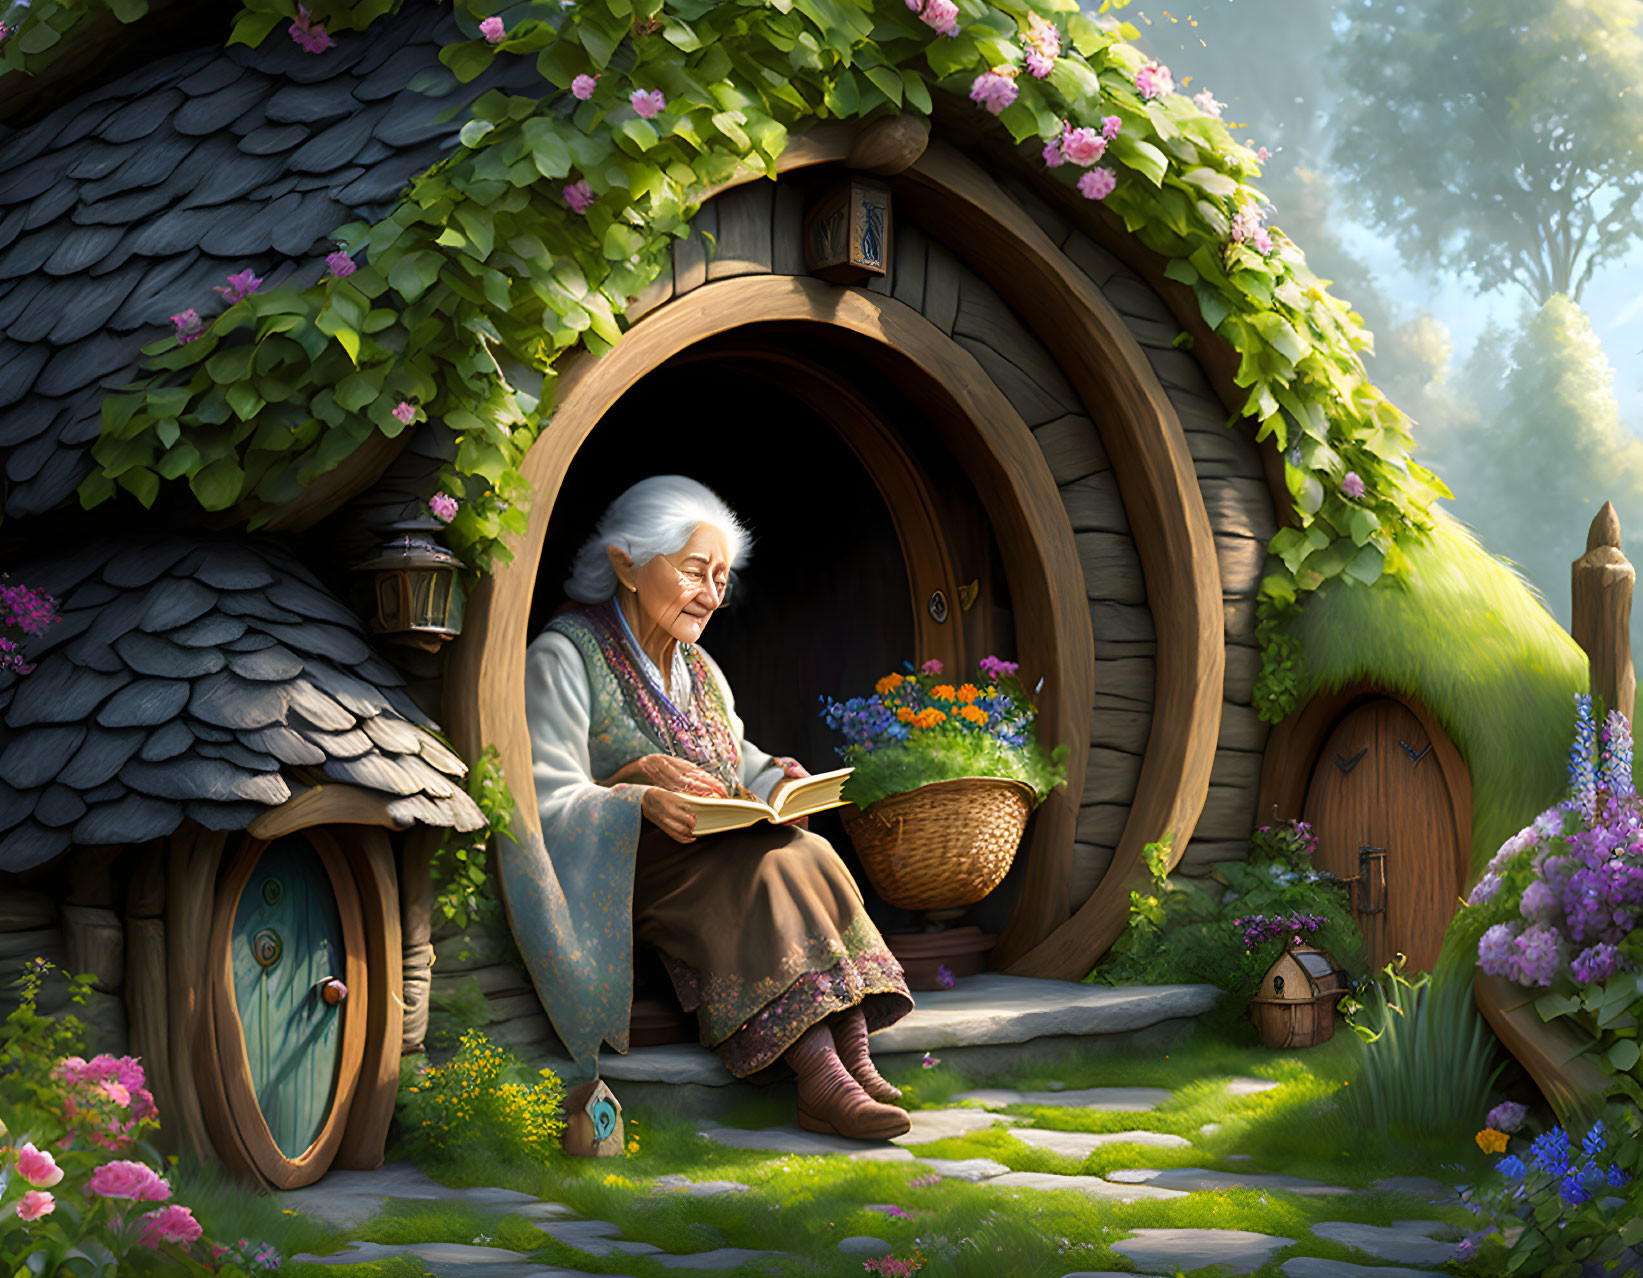 Elderly lady reading book outside quaint round-doored cottage